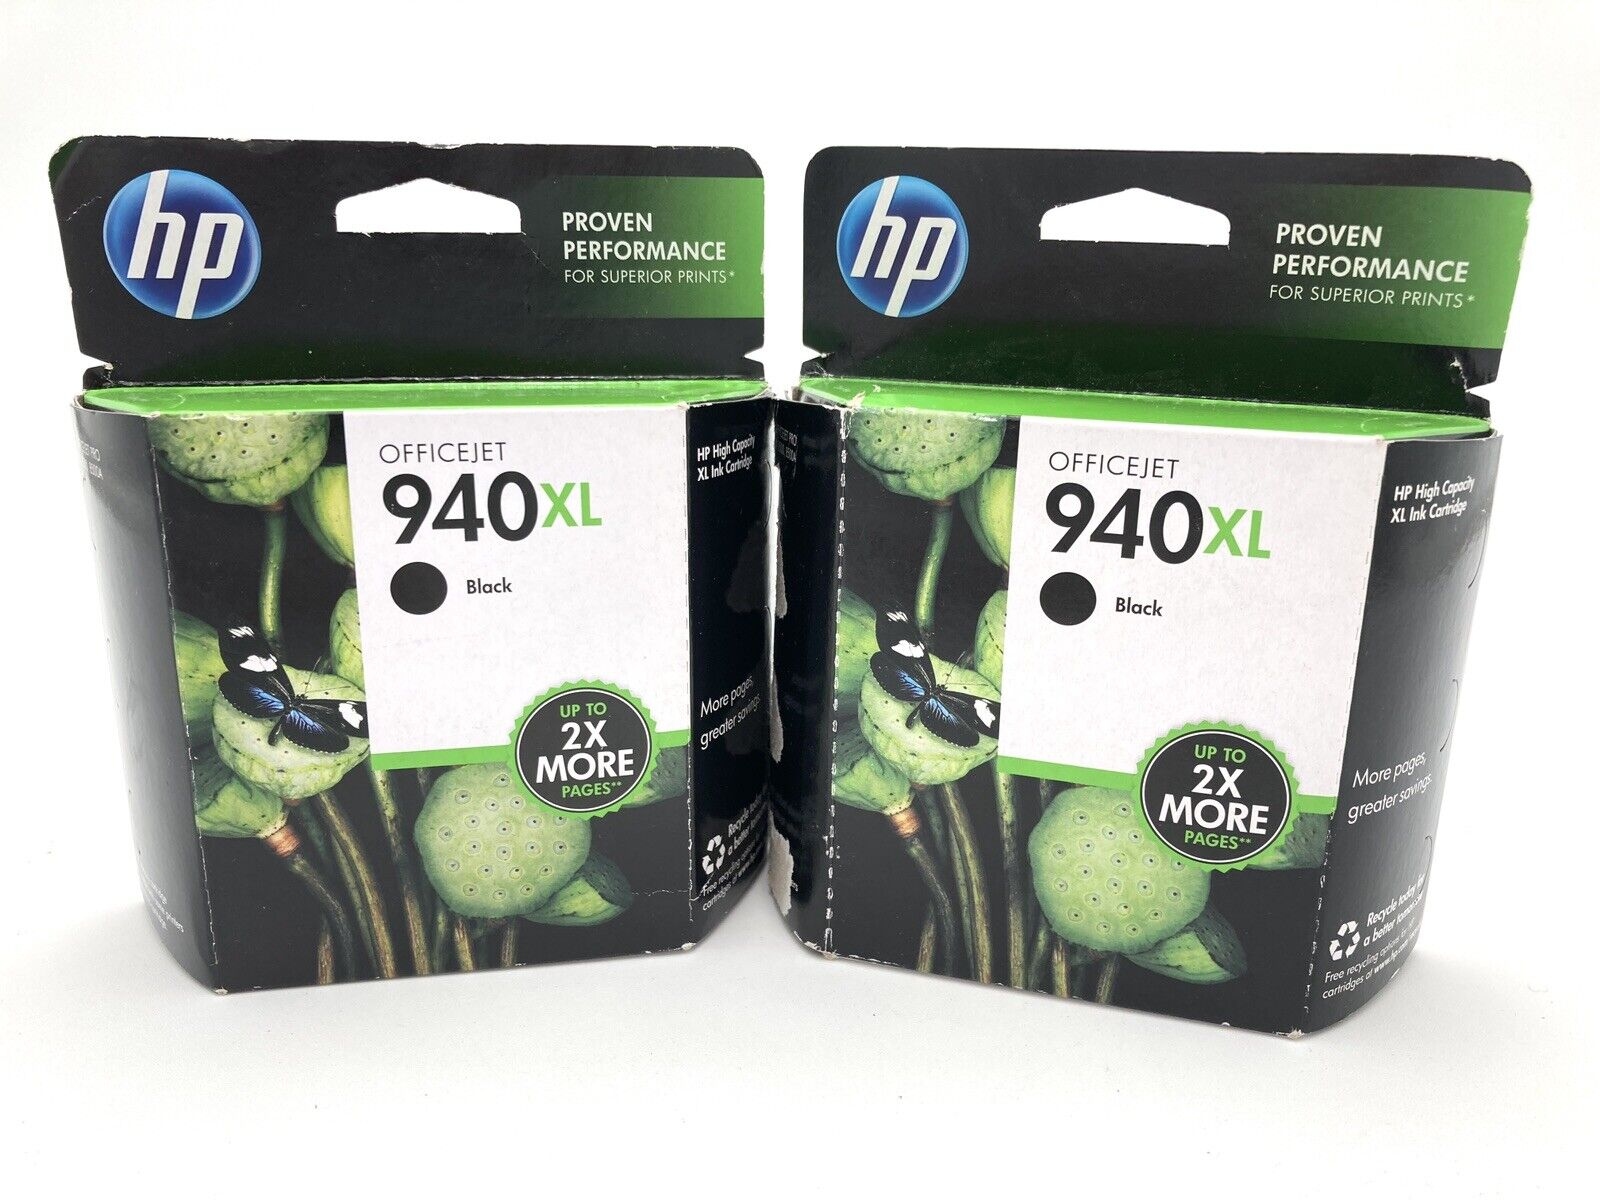 2NEW Genuine HP Officejet 940XL Black C4906AN Exp. 12/2013 Sealed Ink Cartridge